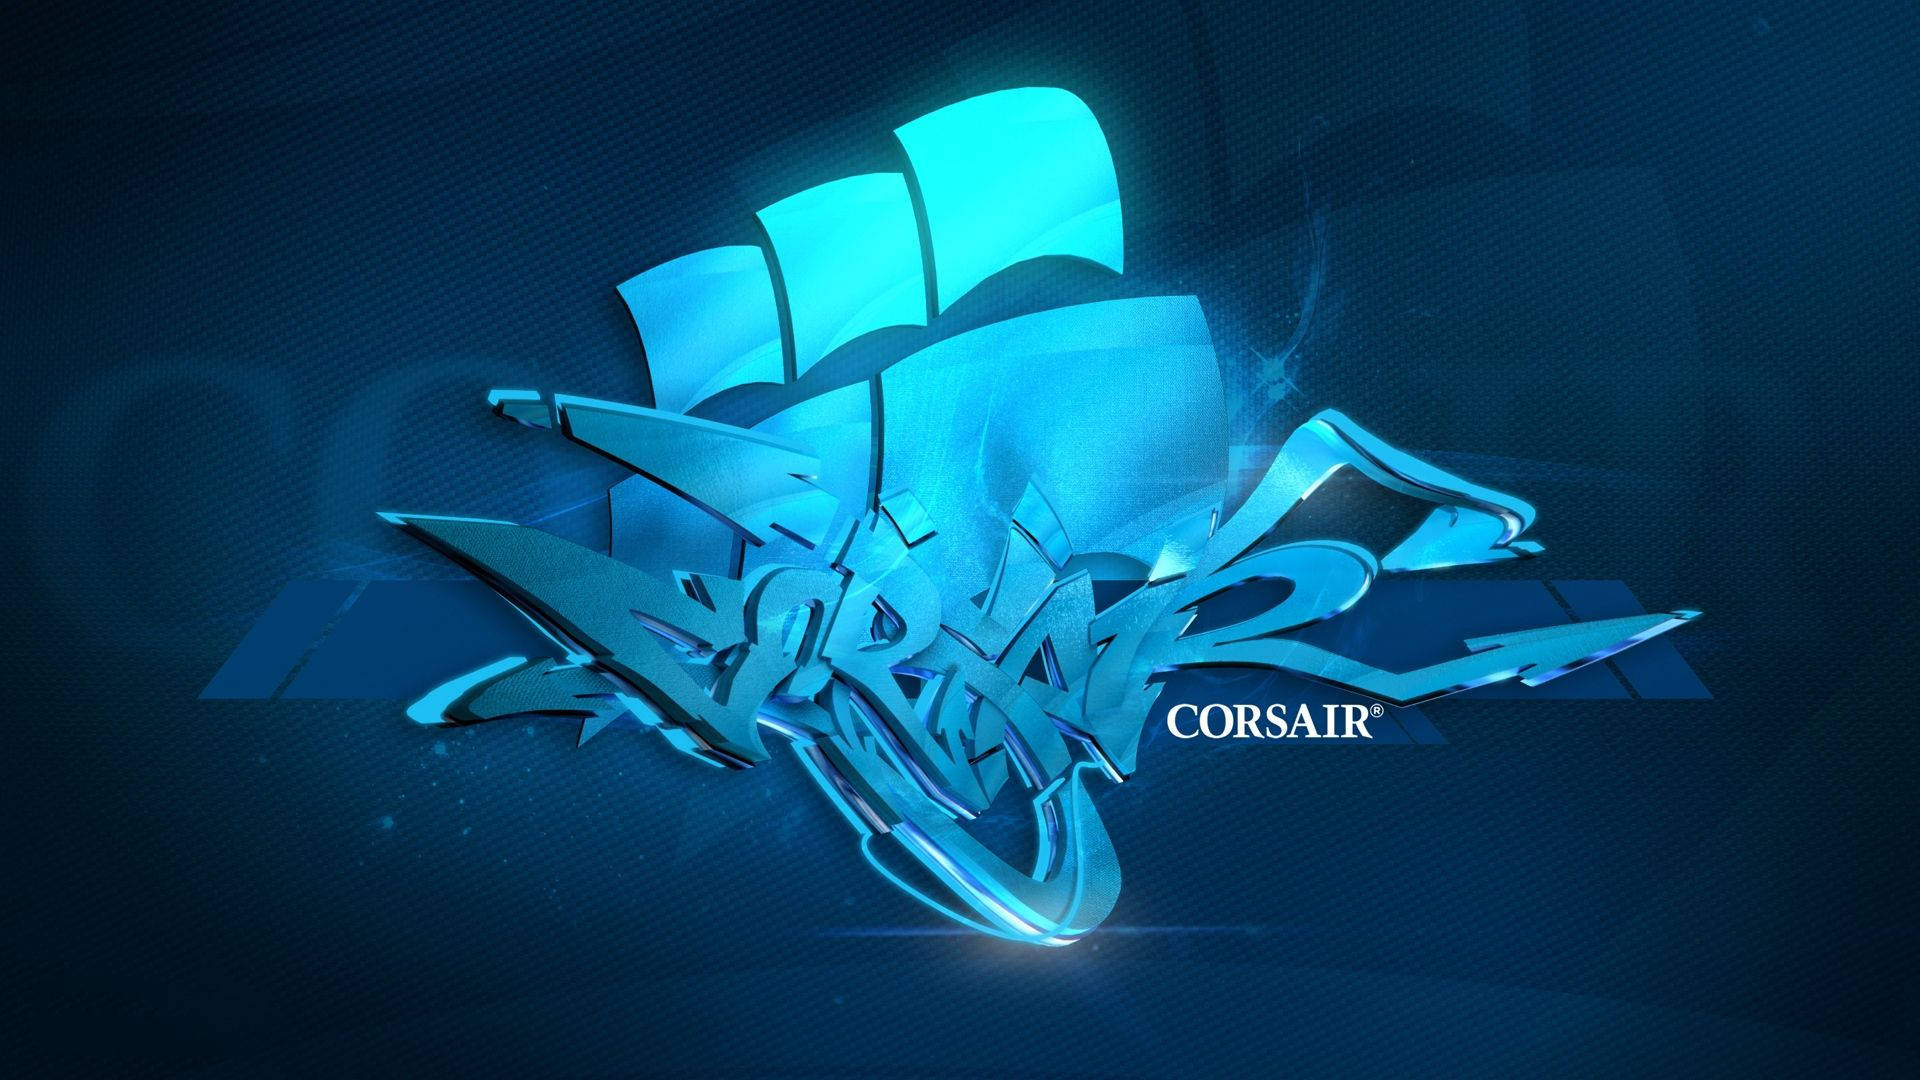 A vibrant blue Corsair logo graffiti. Wallpaper